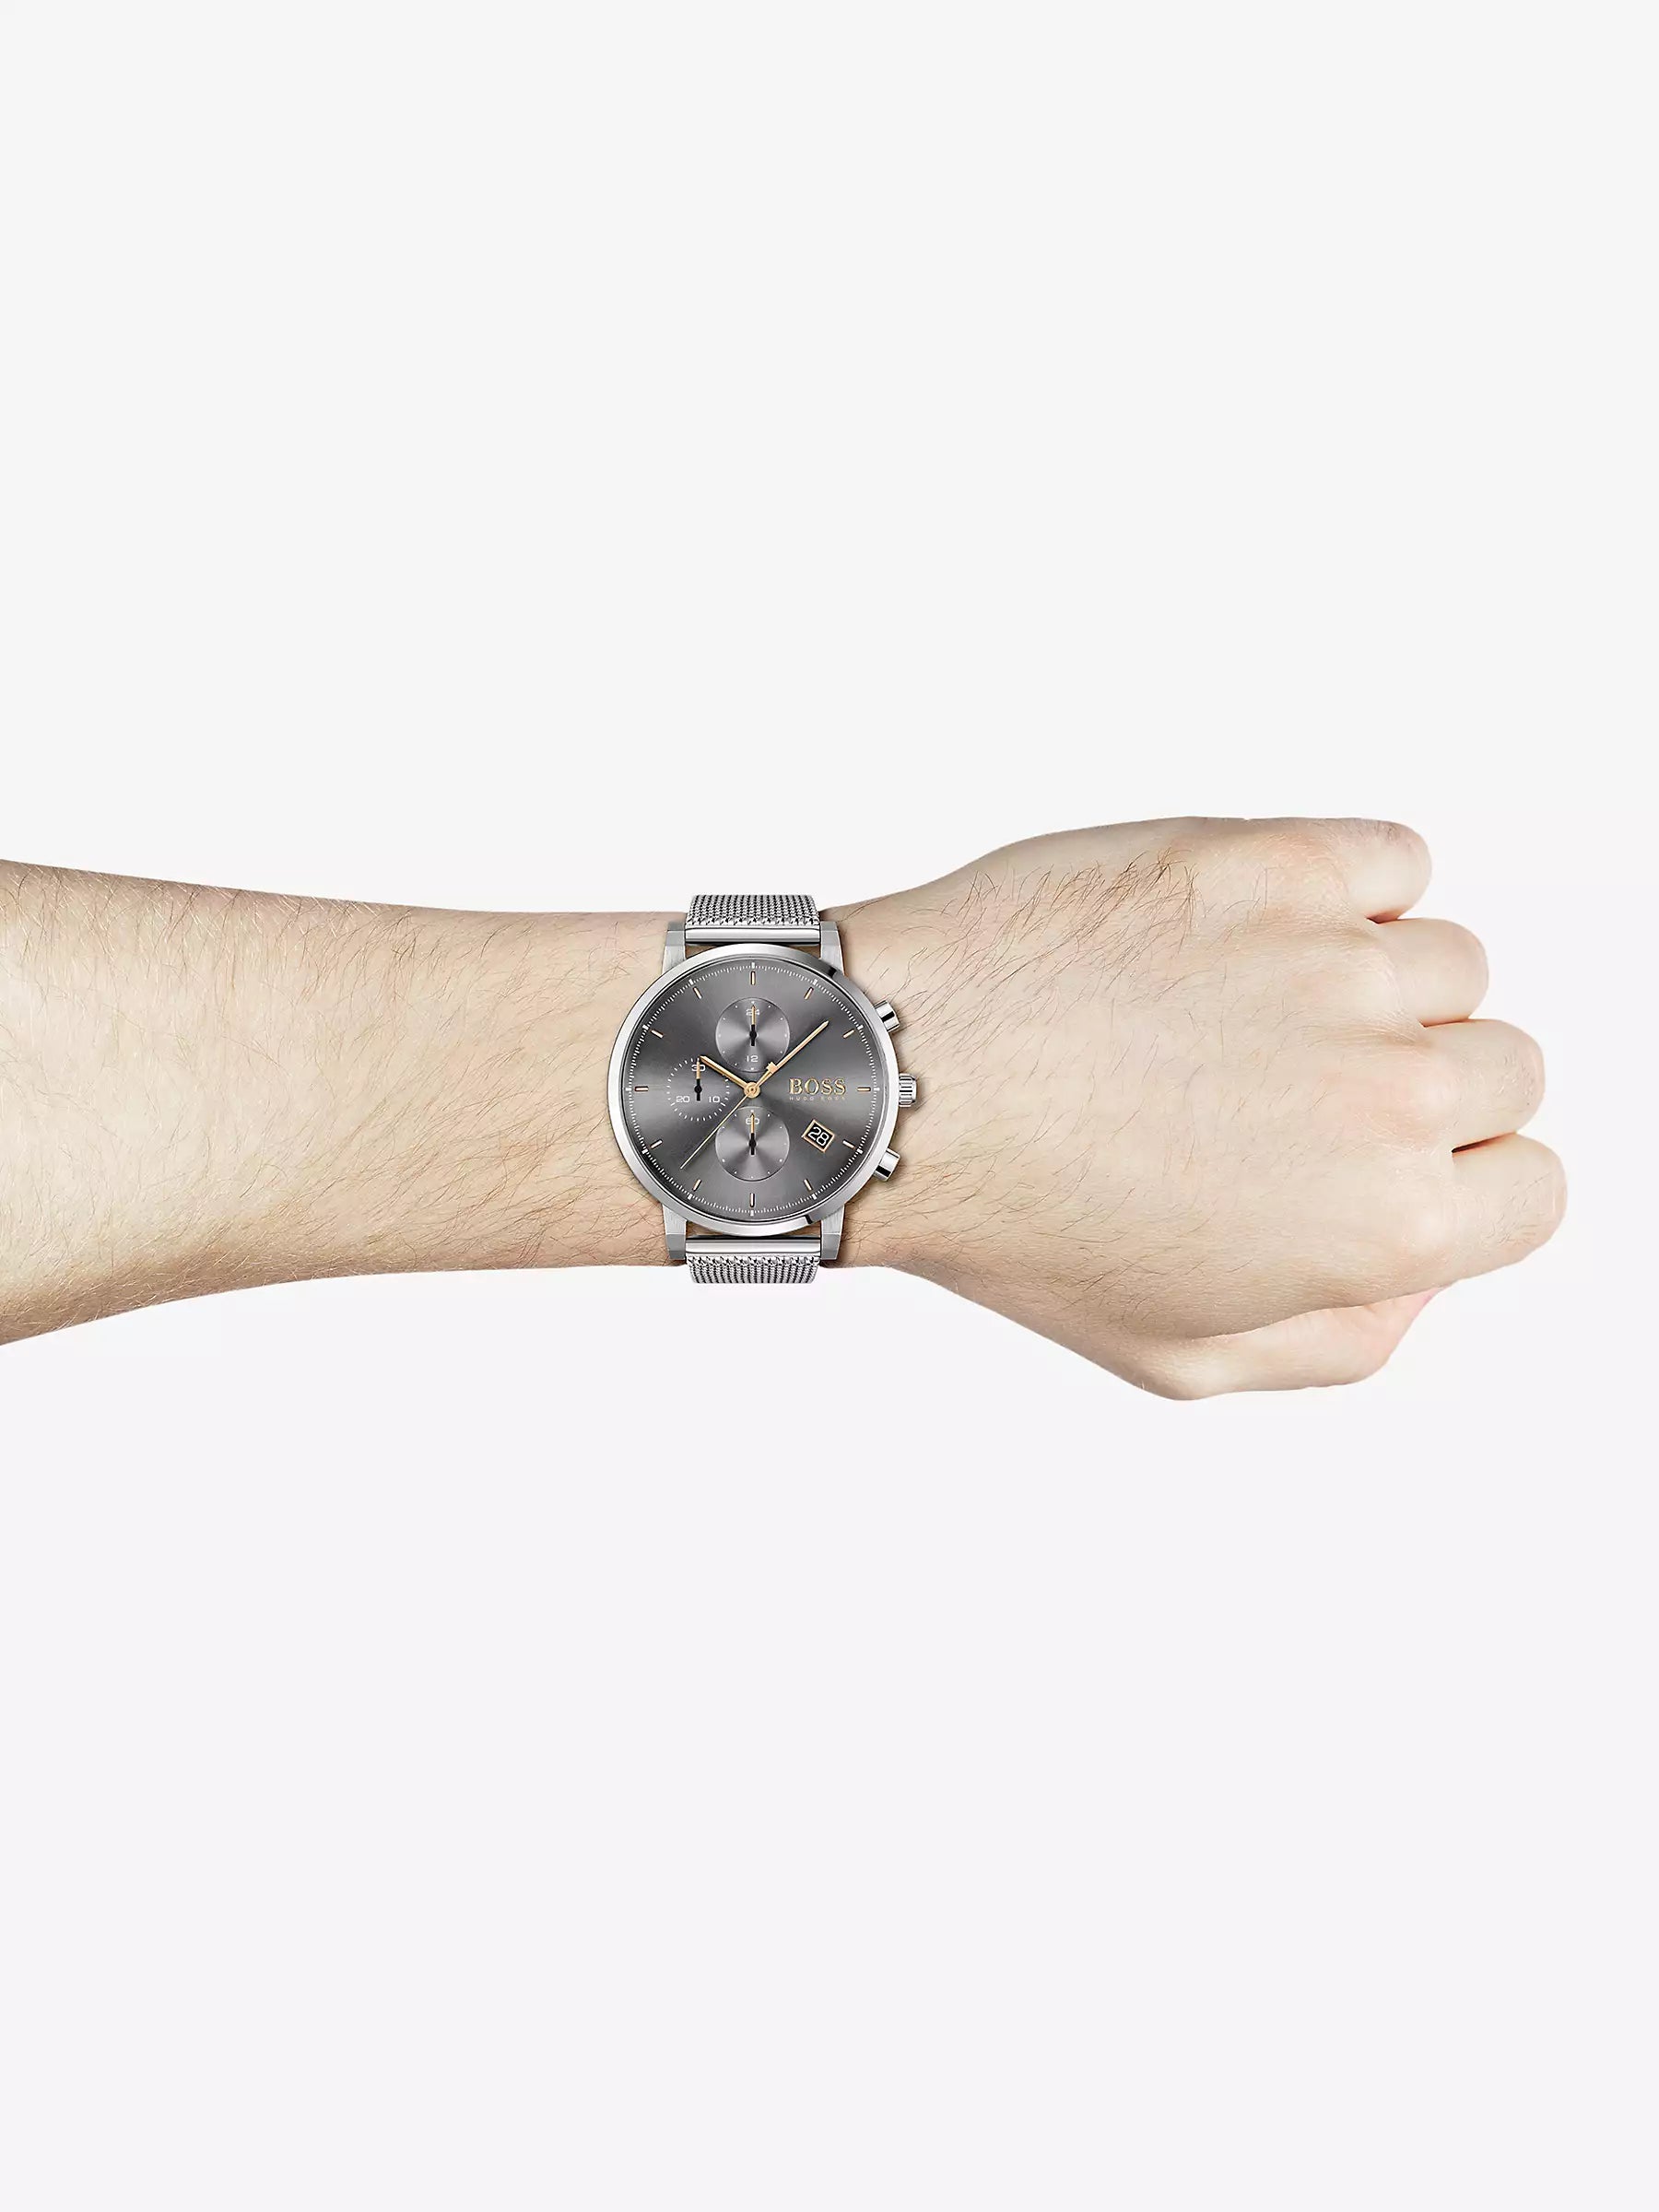 Hugo Boss Integrity Grey Dial Silver Mesh Bracelet Watch for Men - 1513807